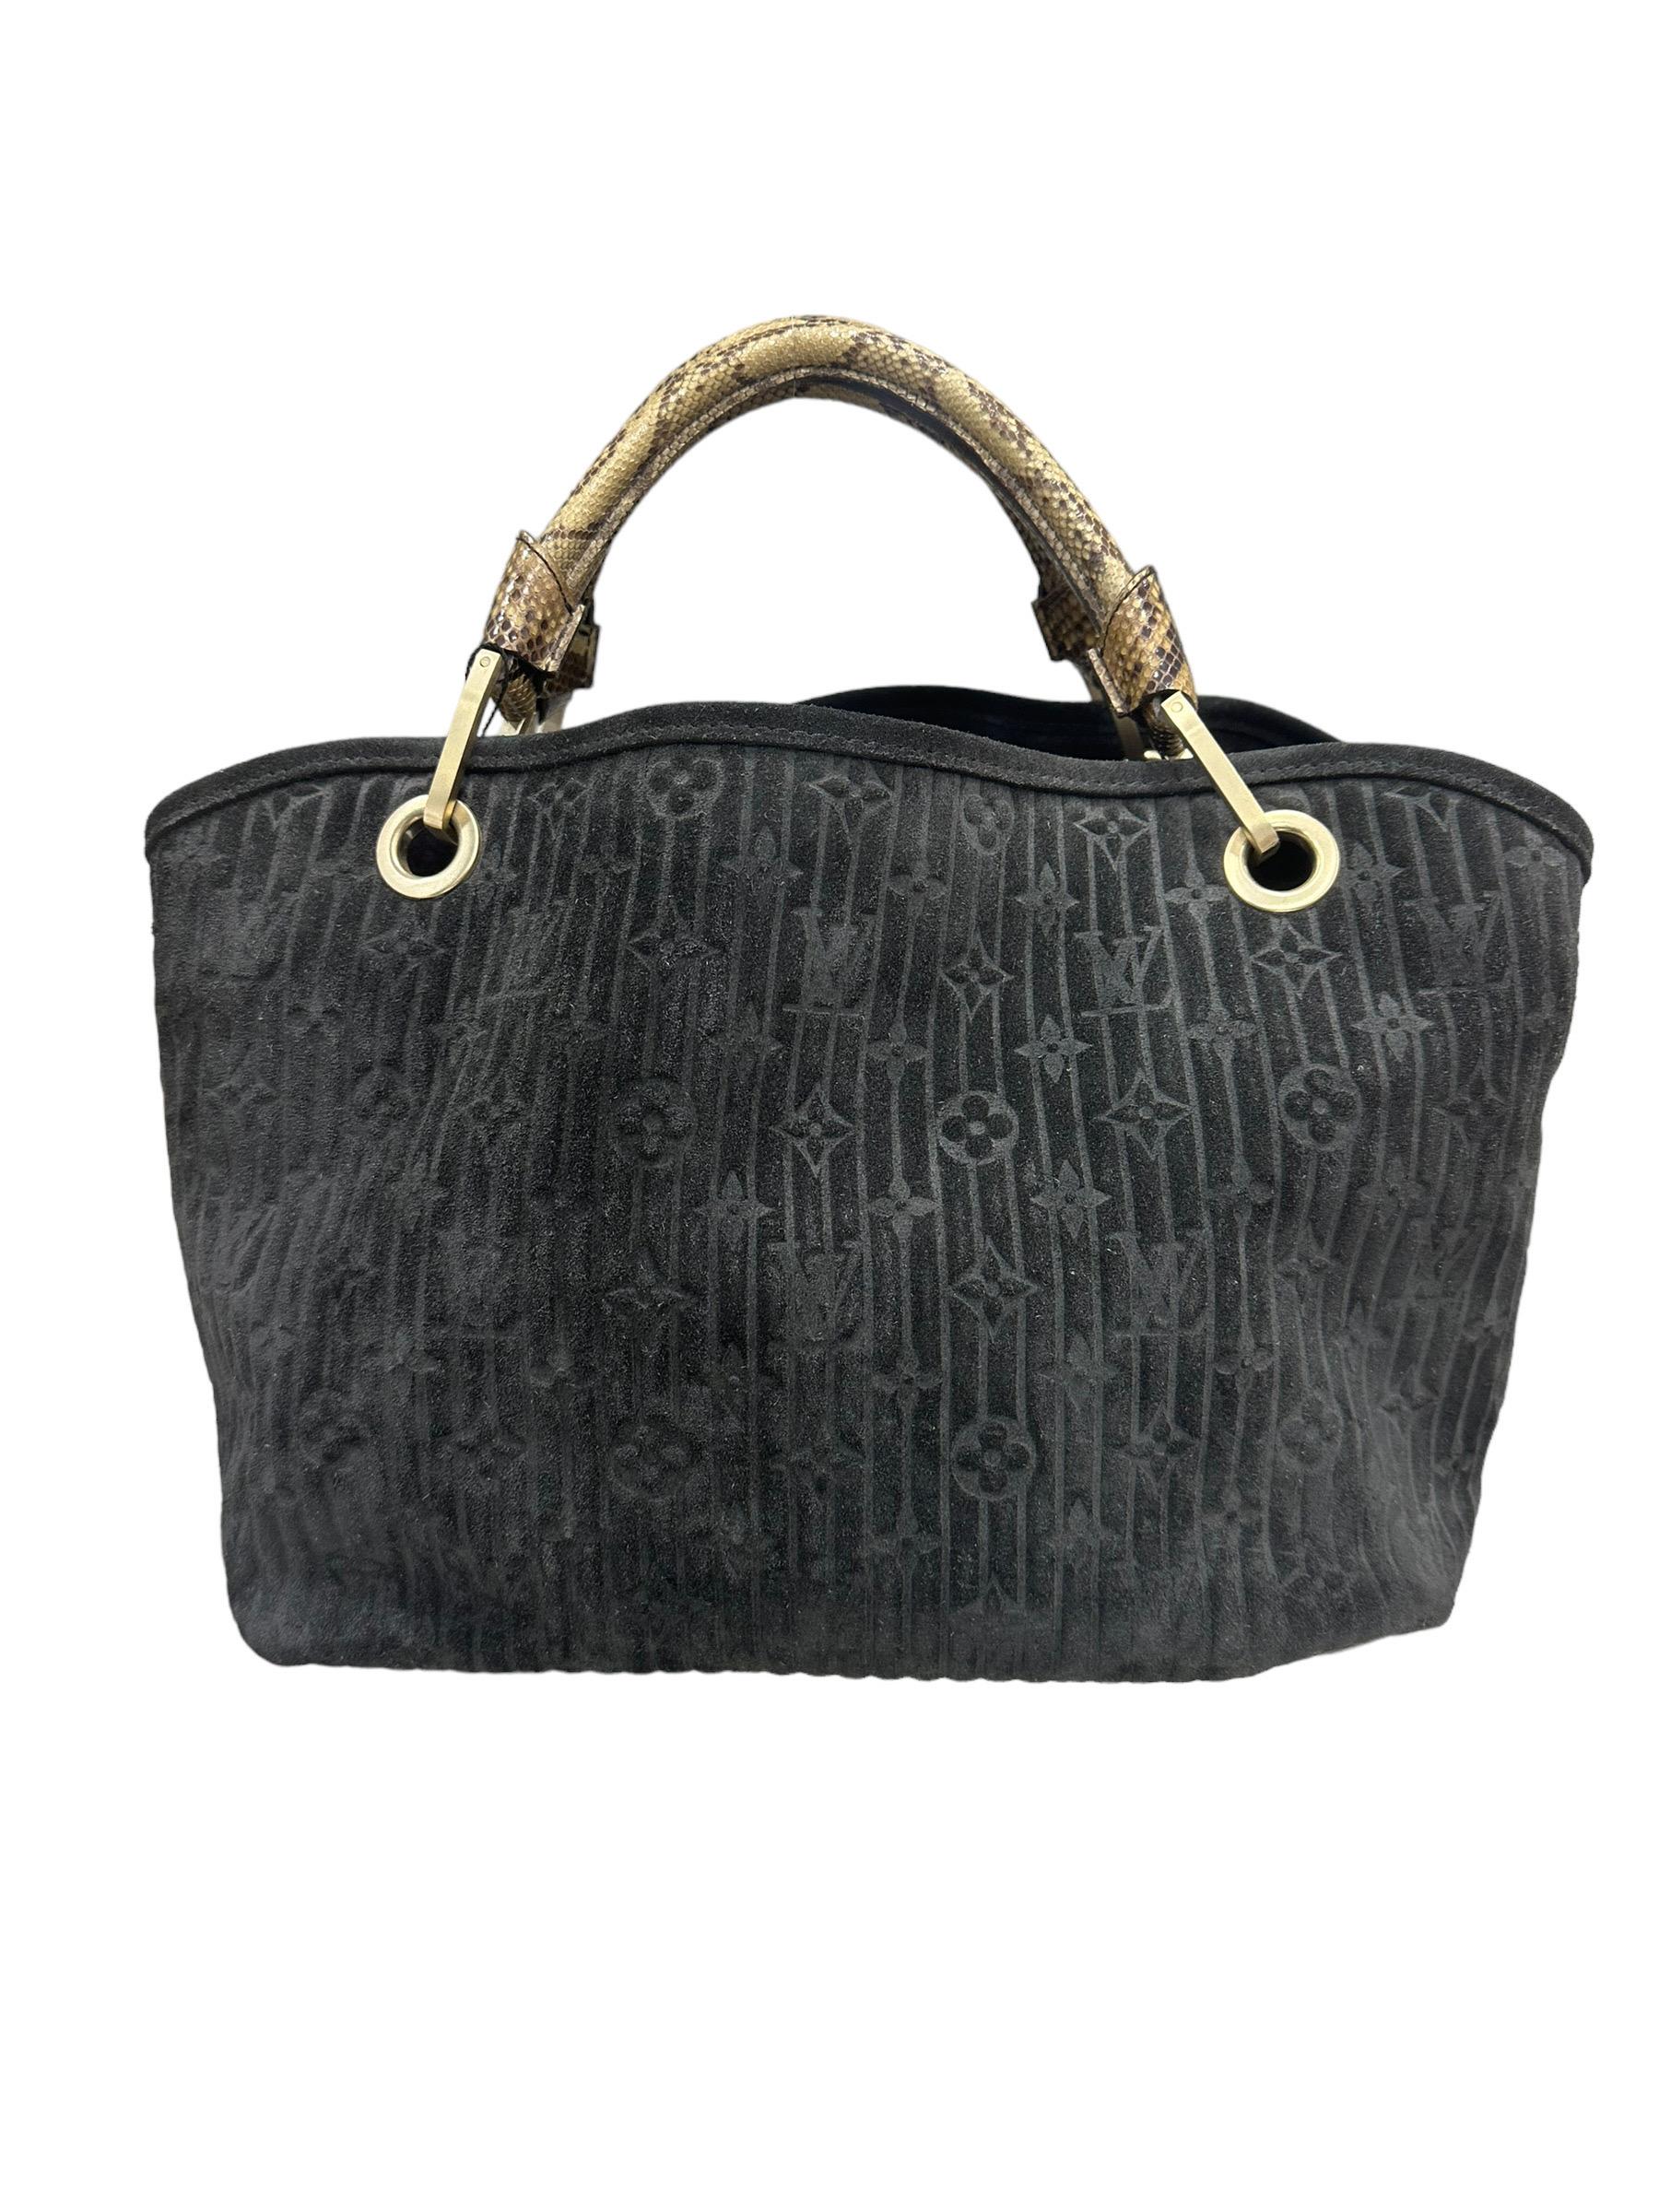 2008 Lousi Vuitton Whisper Black Suede Top Handle Bag Limited Edition For Sale 6